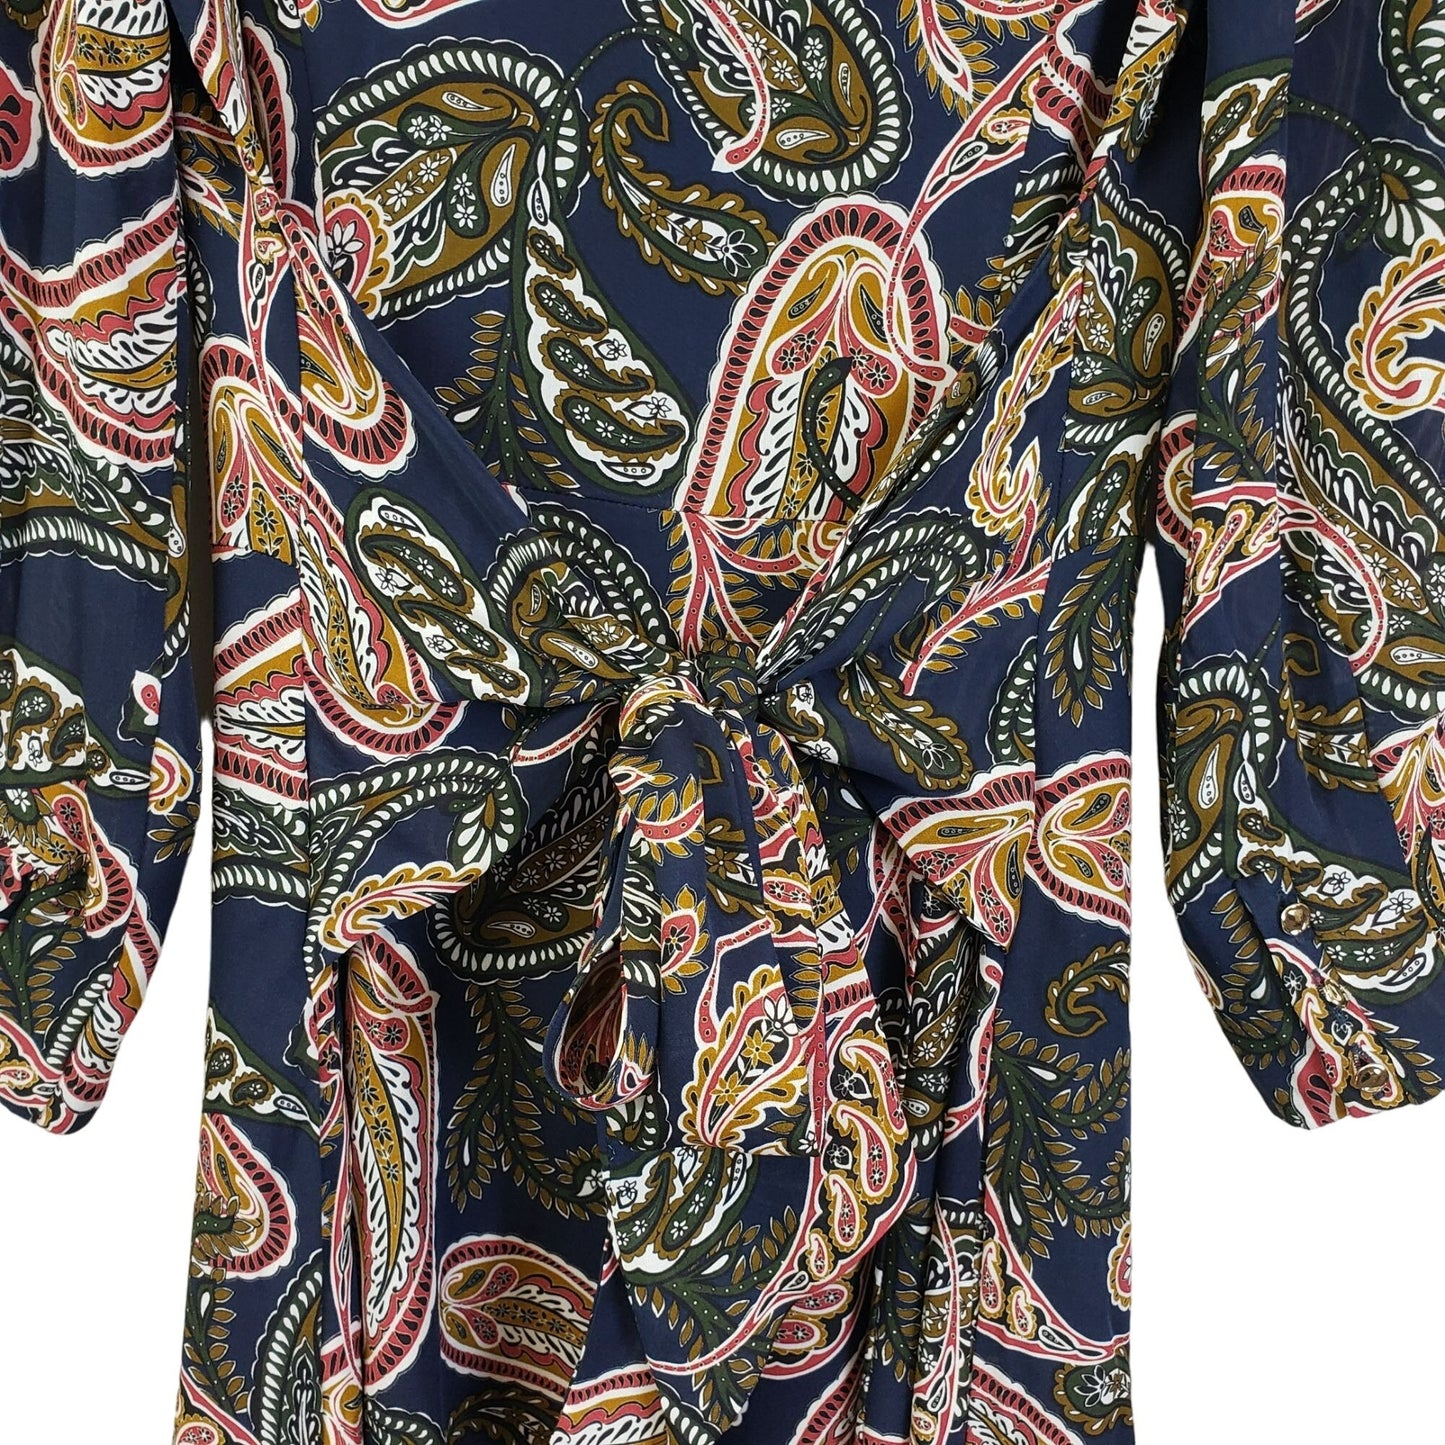 NWT Nicholas 100% Silk Noura Jaipur Paisley Print Maxi Dress in Midnight Size 4